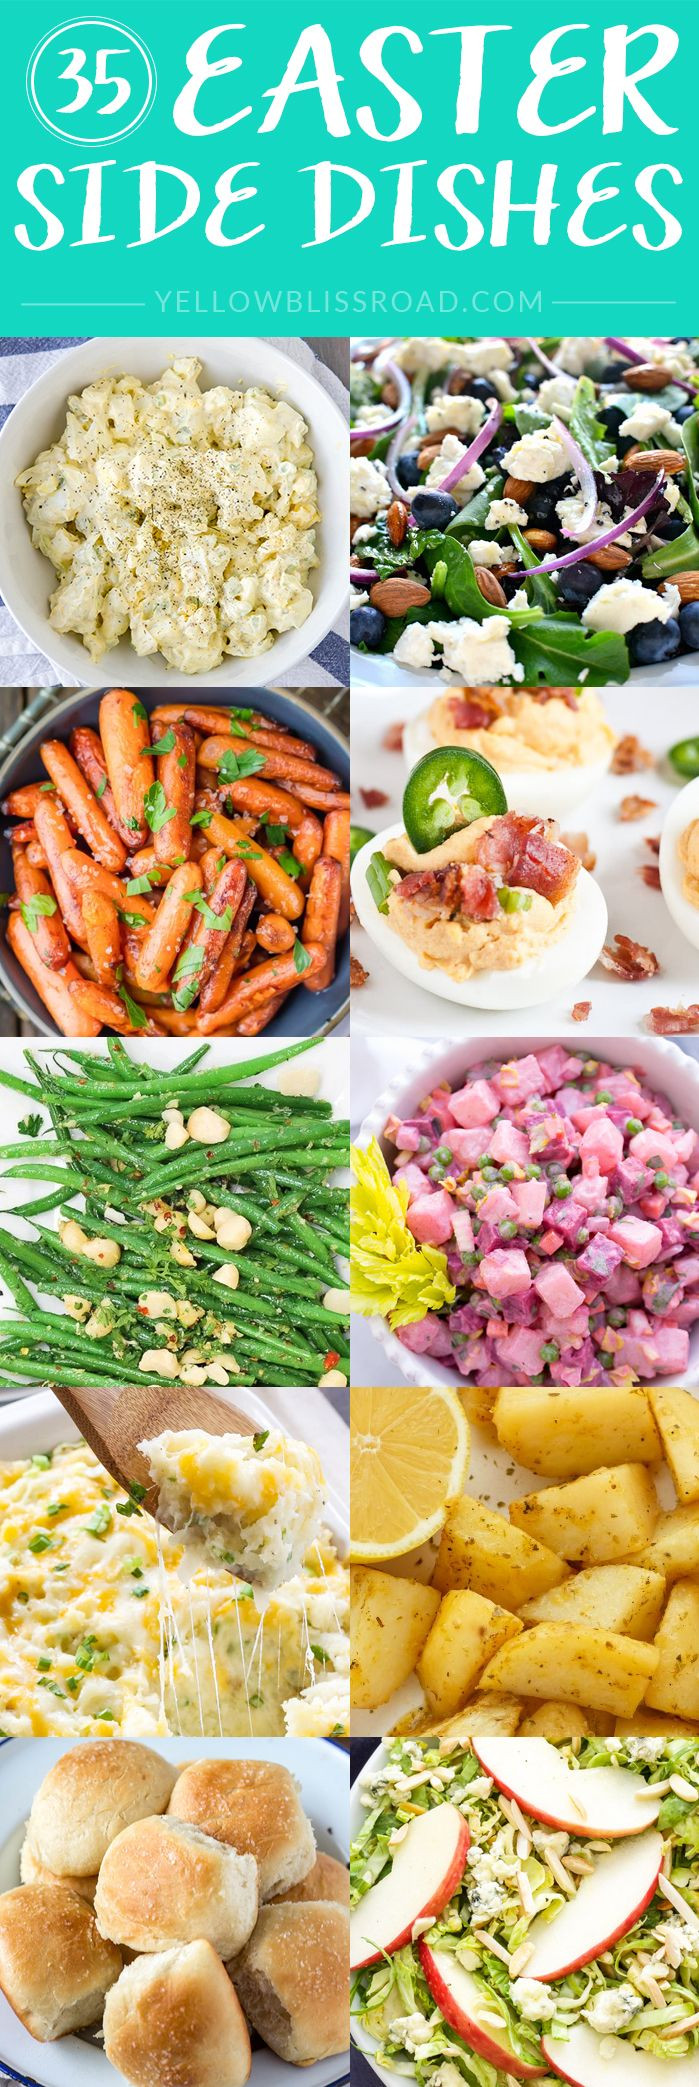 Best Easter Dinner Menu Ideas
 17 Best images about brunch on Pinterest